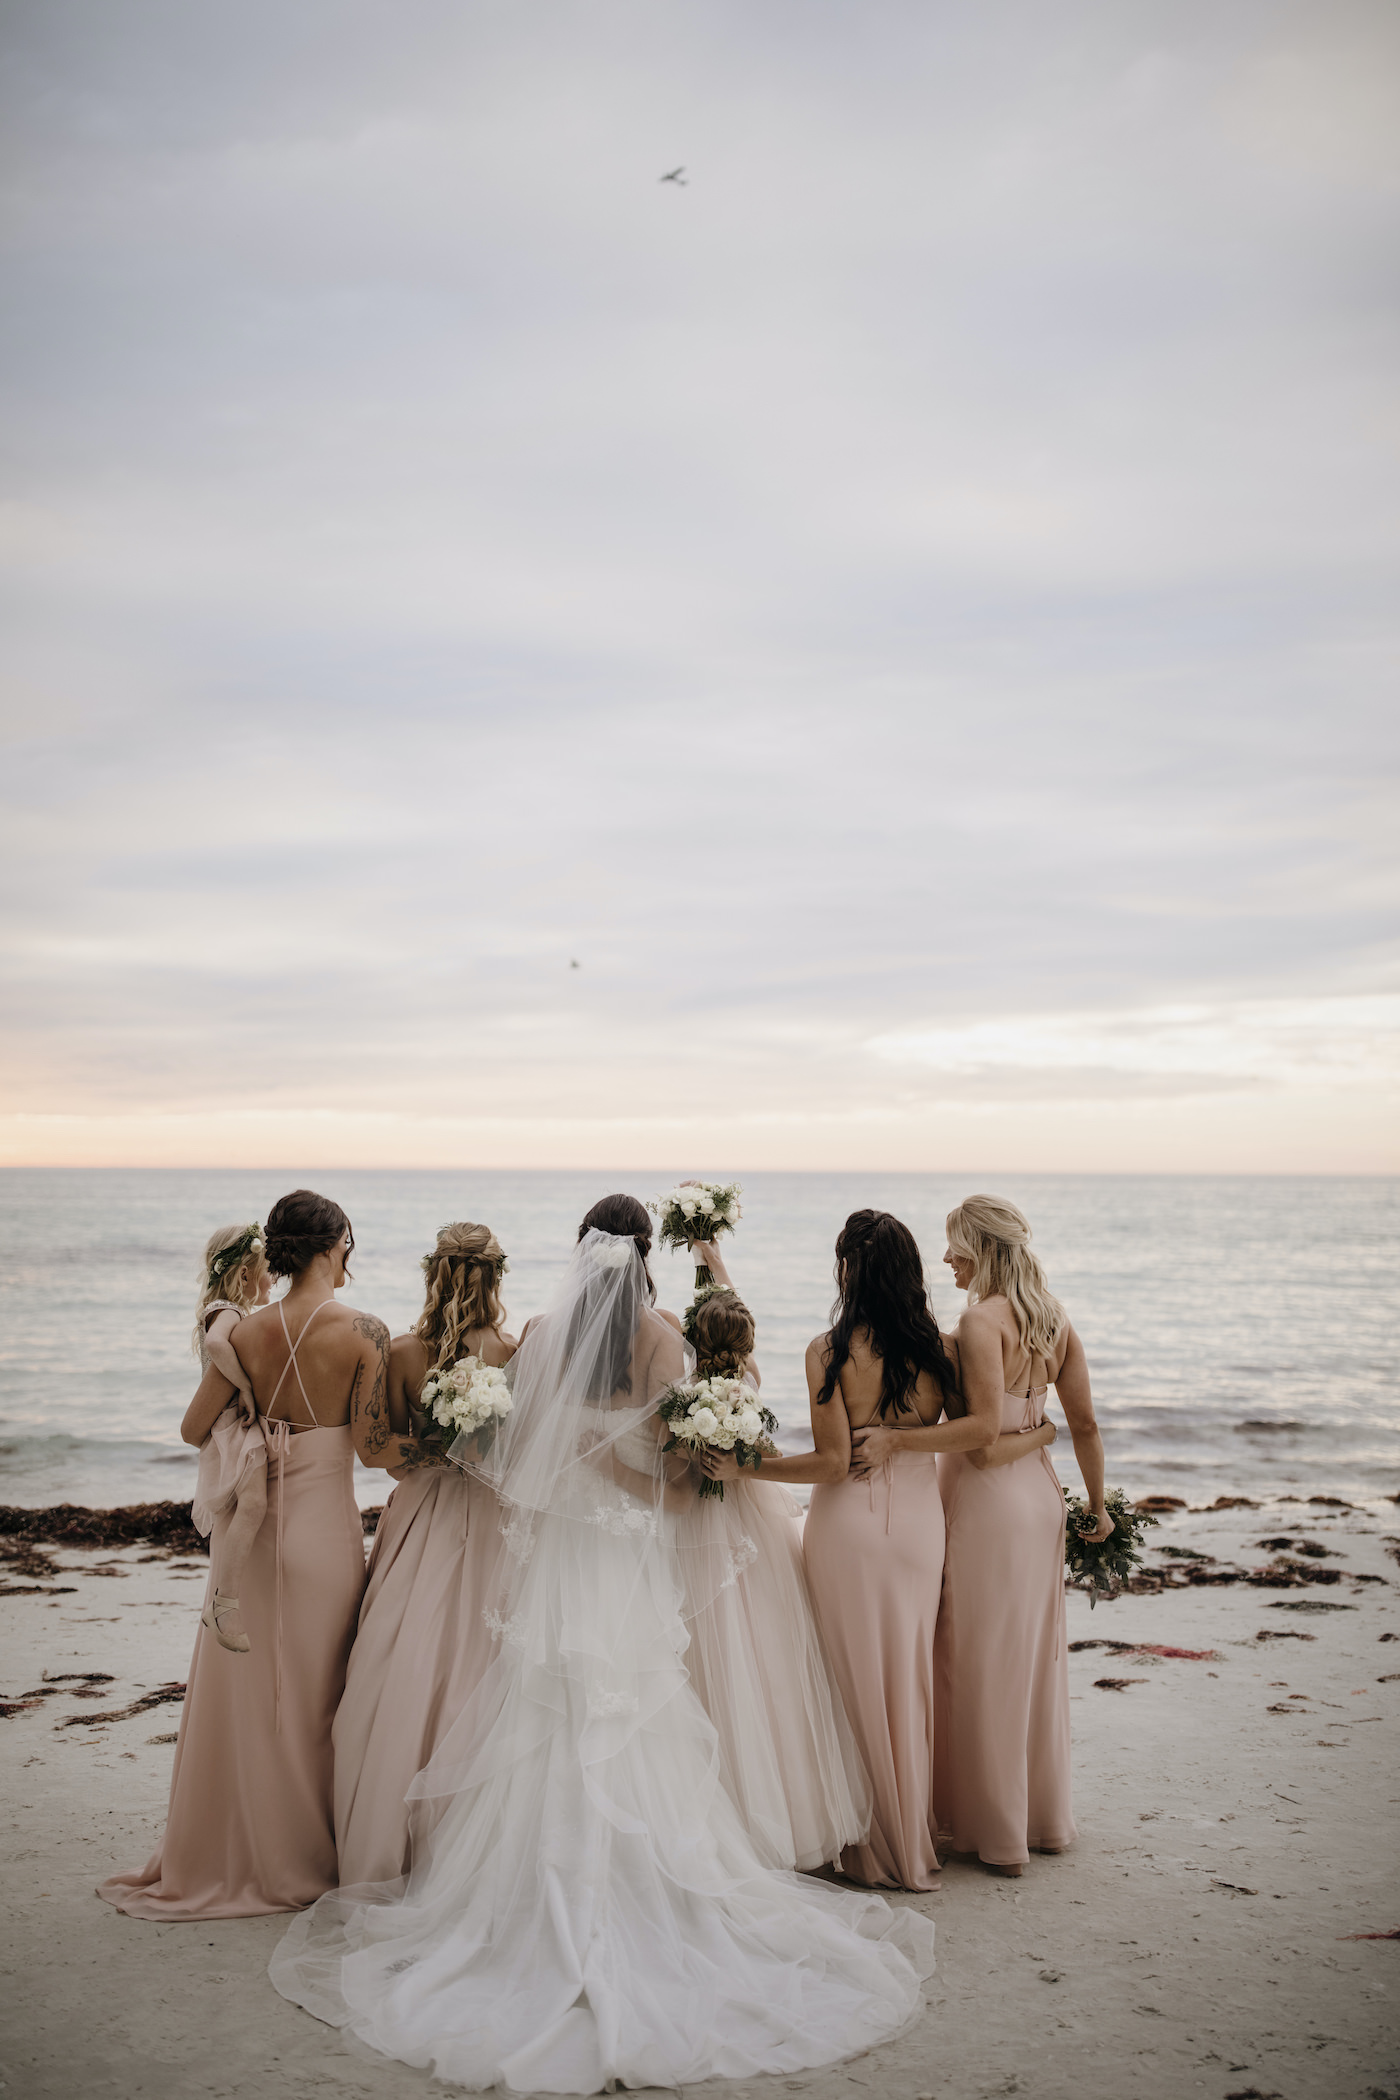 Bride and Bridesmaids Outdoor Beach Portrait Shot | Bridesmaids in Blush Pink Long Chiffon Dresses | Blush Pink and White Bridesmaids Bouquets with Greenery